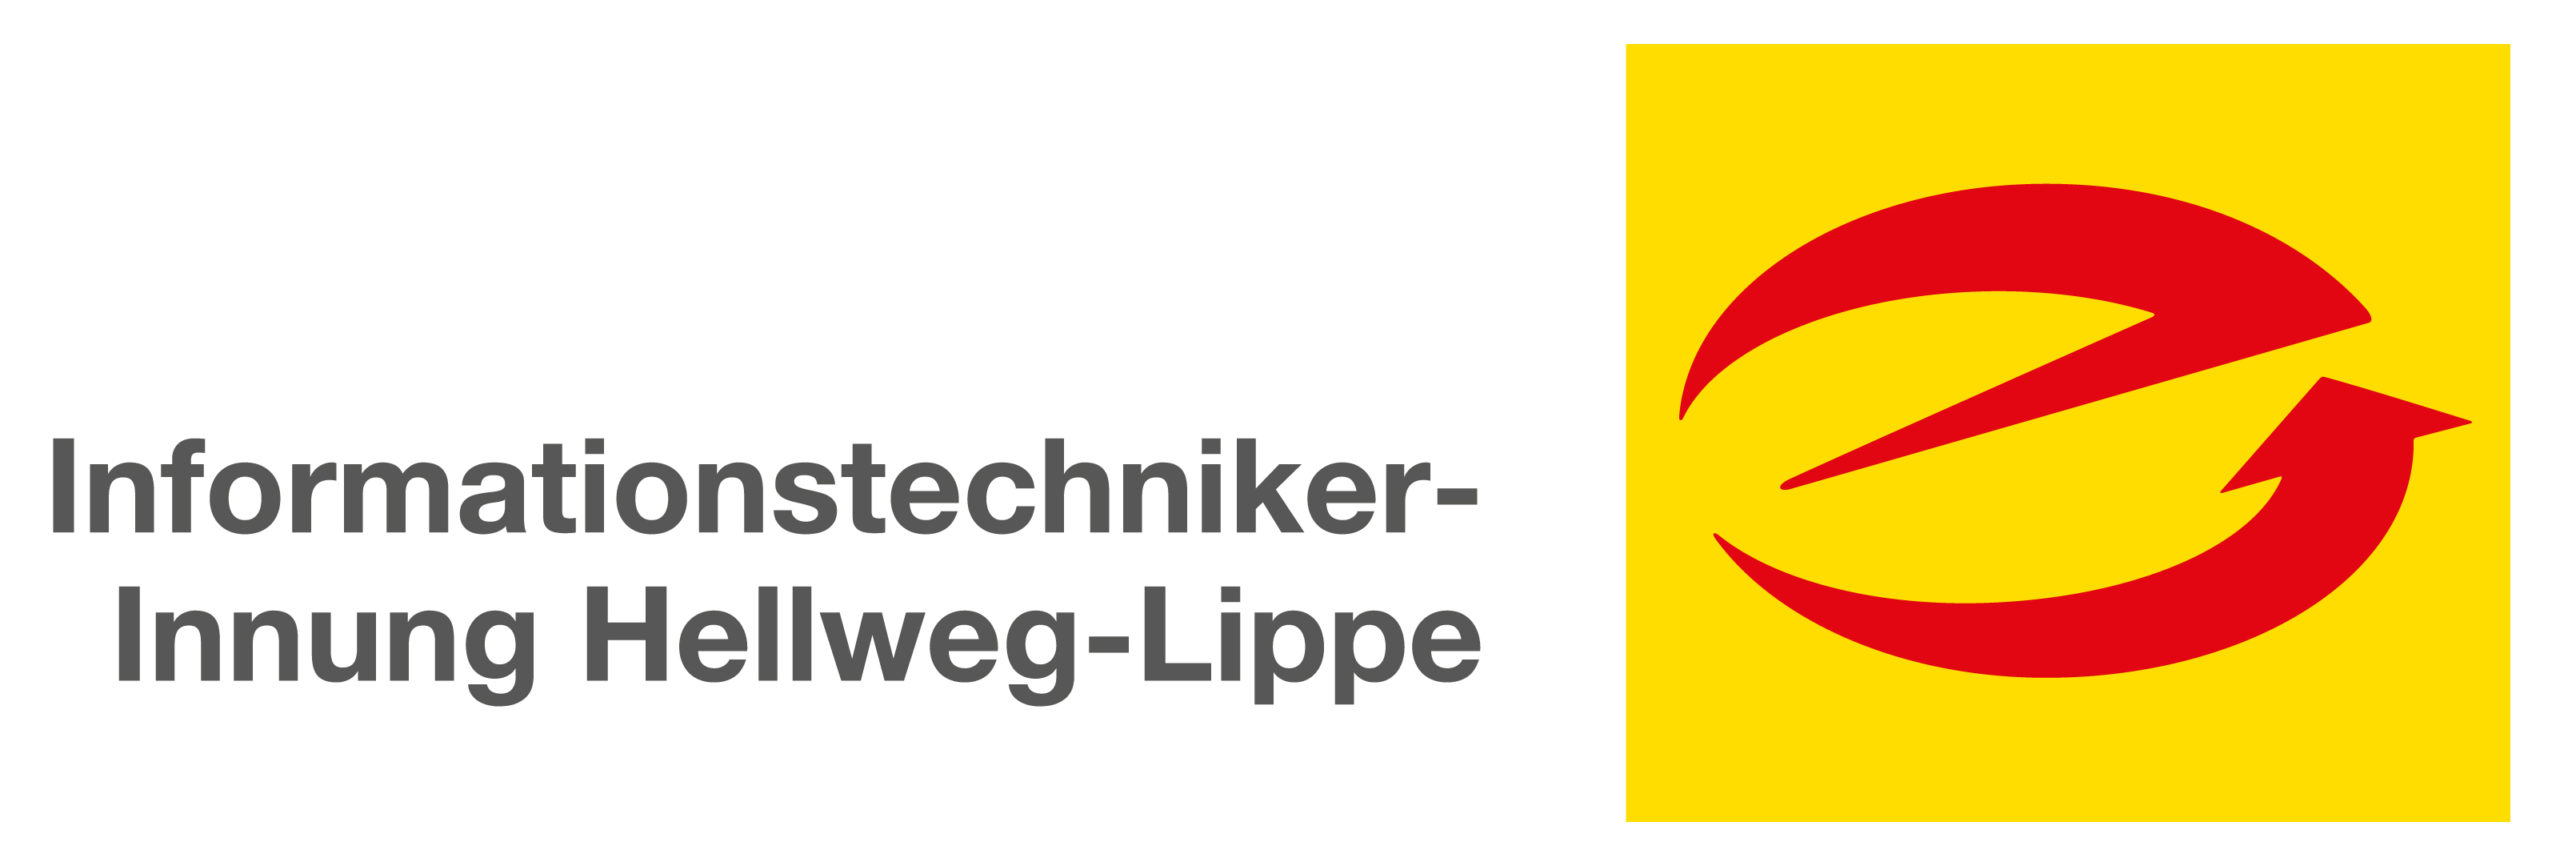 Informationstechniker-Innung Hellweg-Lippe